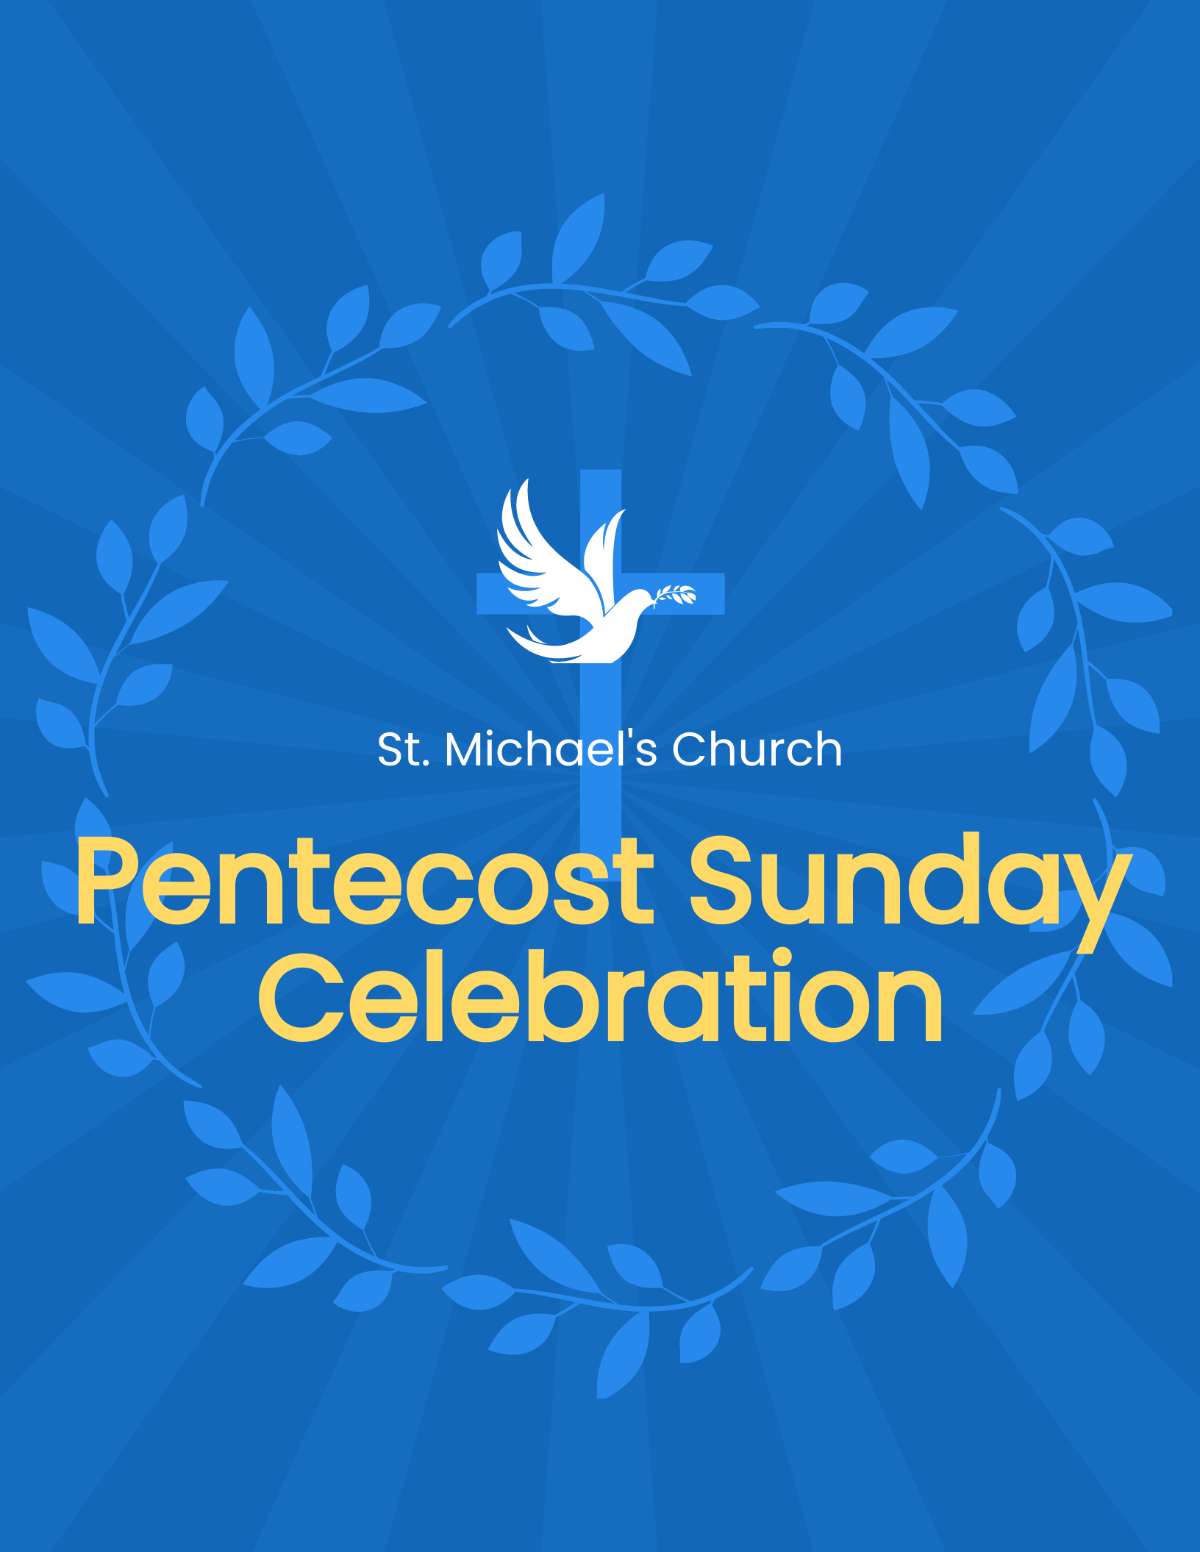 Pentecost Sunday Event Flyer Template